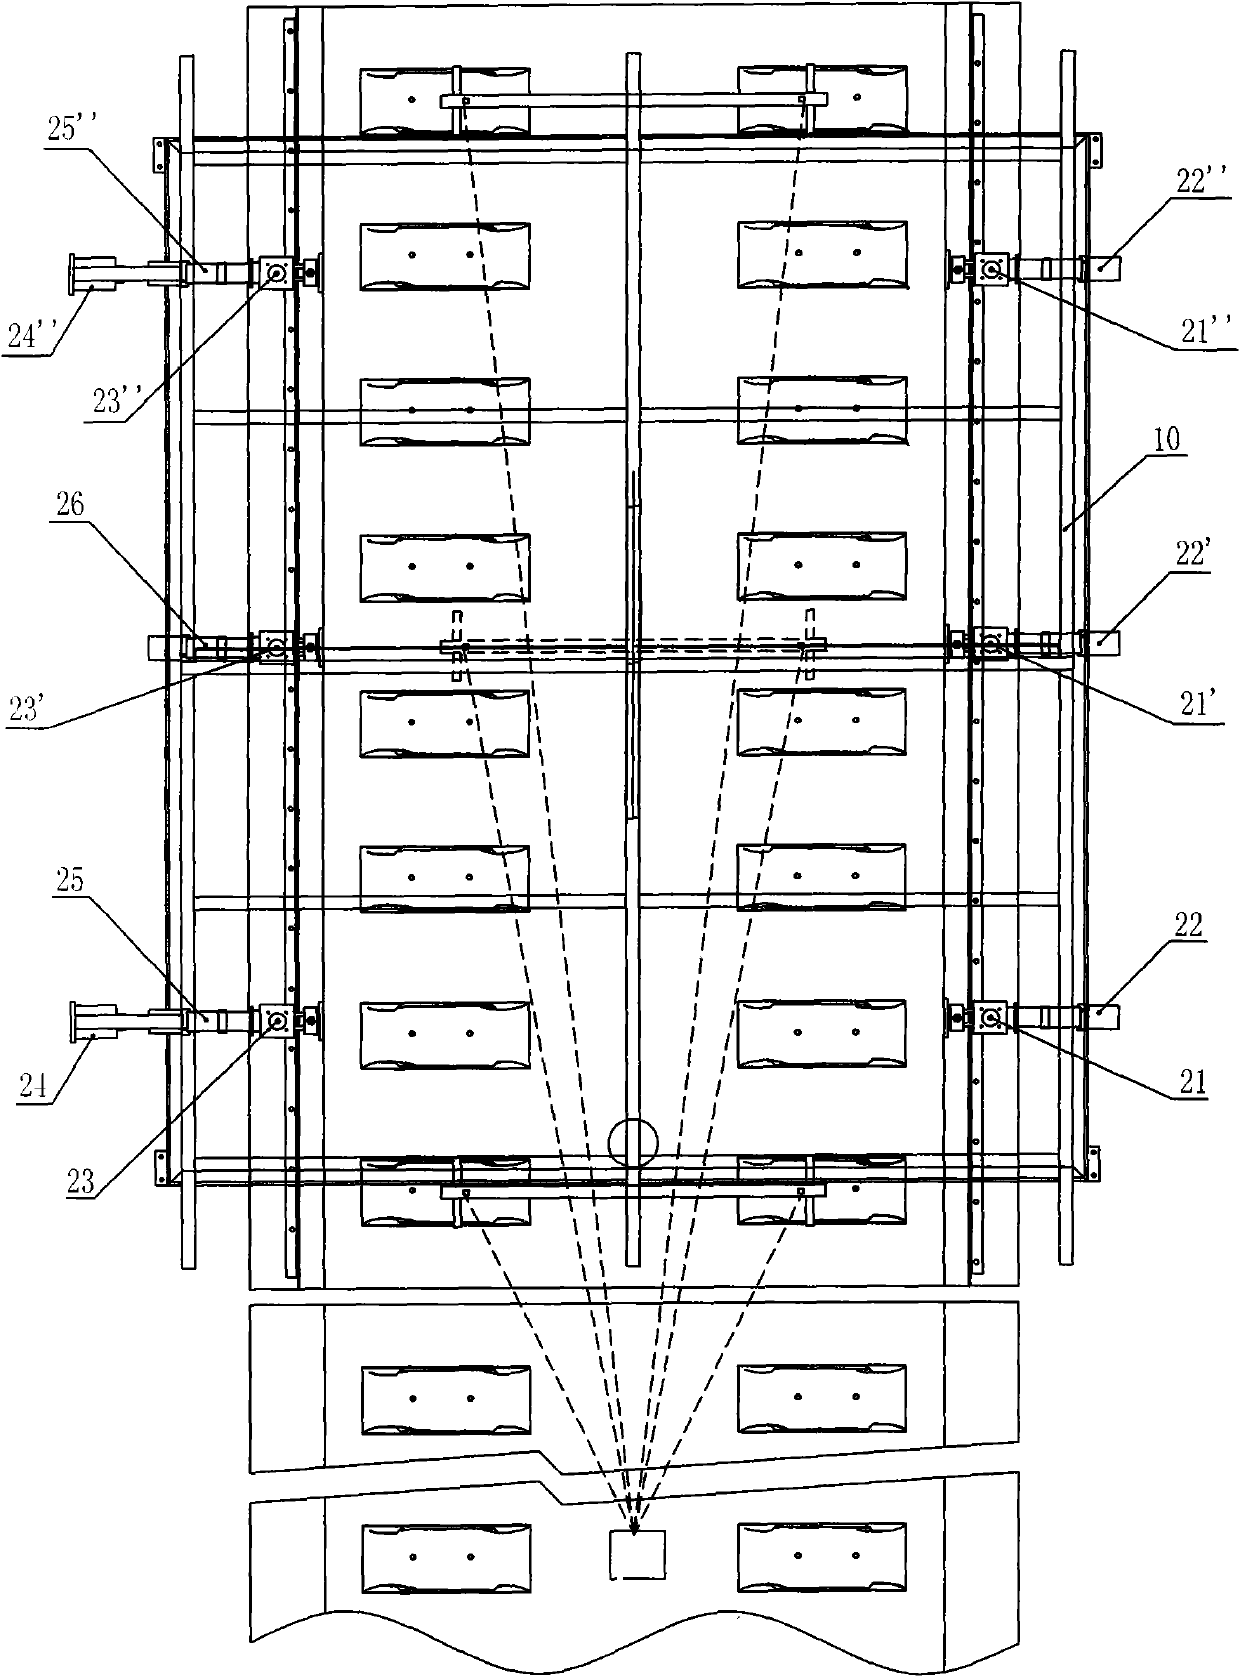 CRTS (China Railway Track System) II type track plate pavement video sensing mechanism